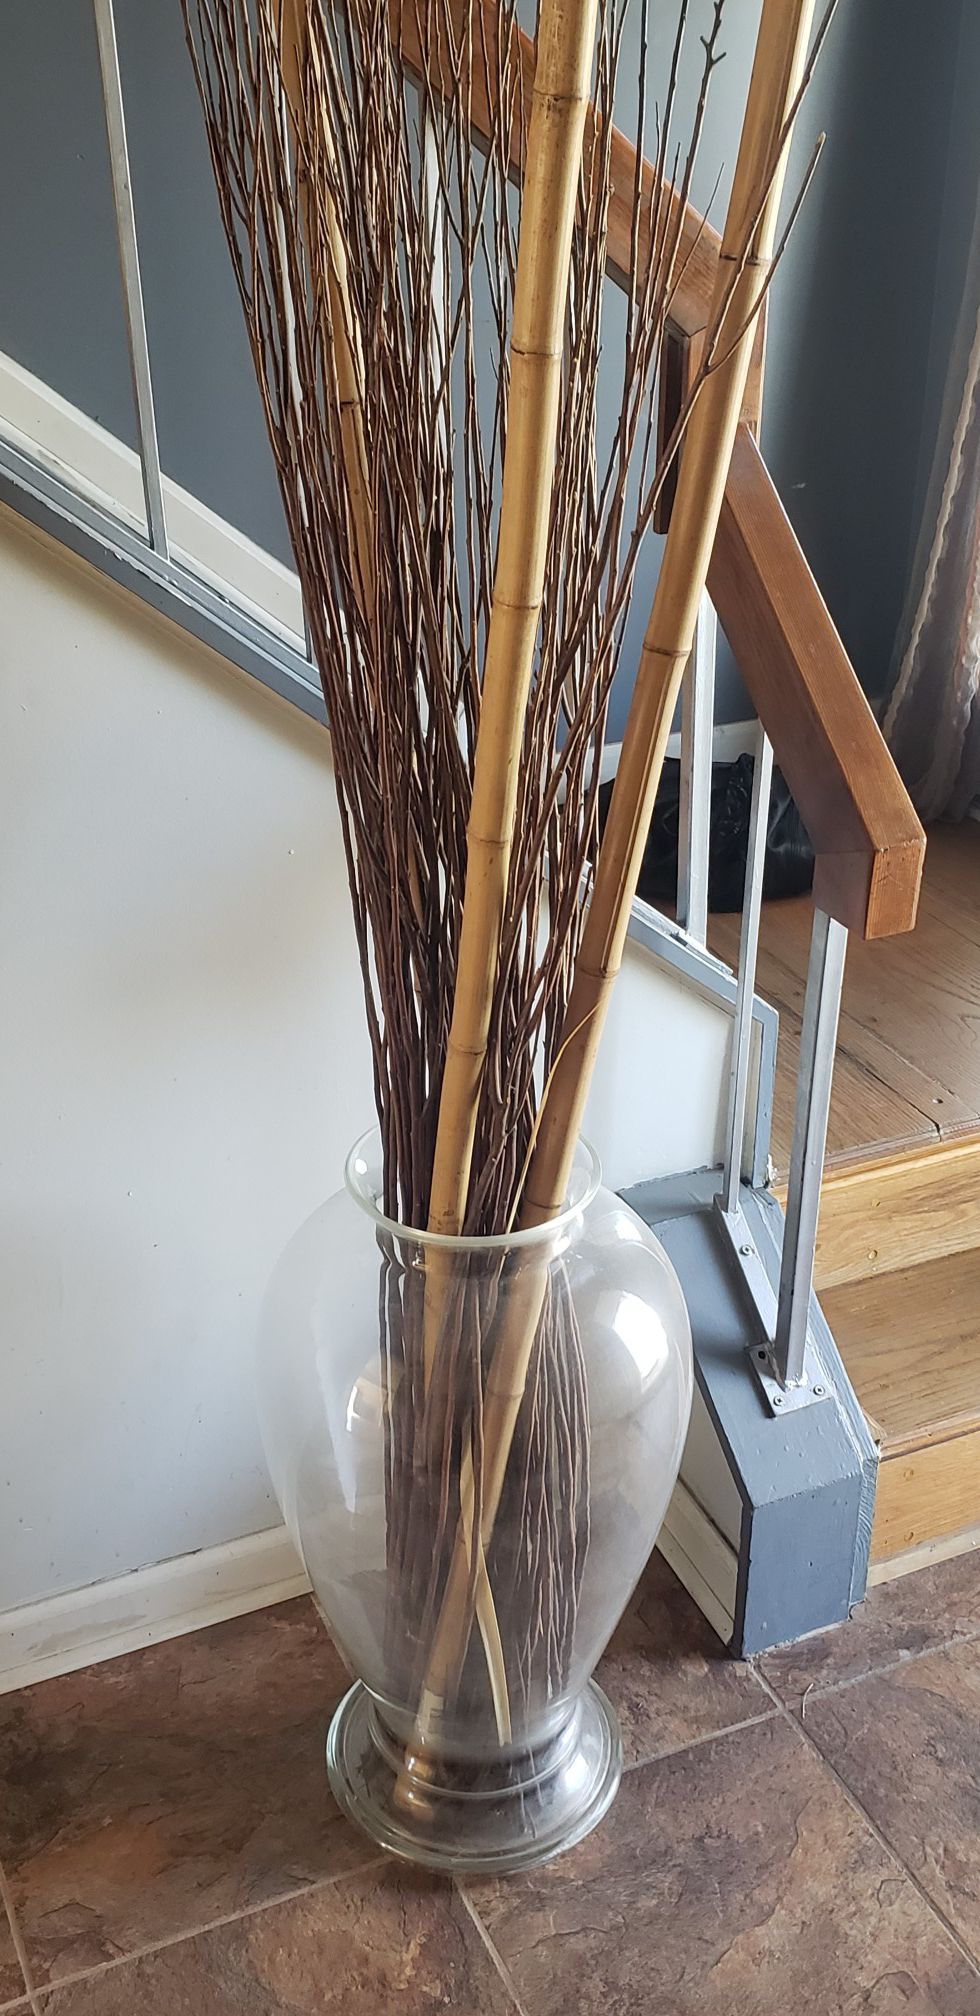 Decor. Floor Vase with branch fillers